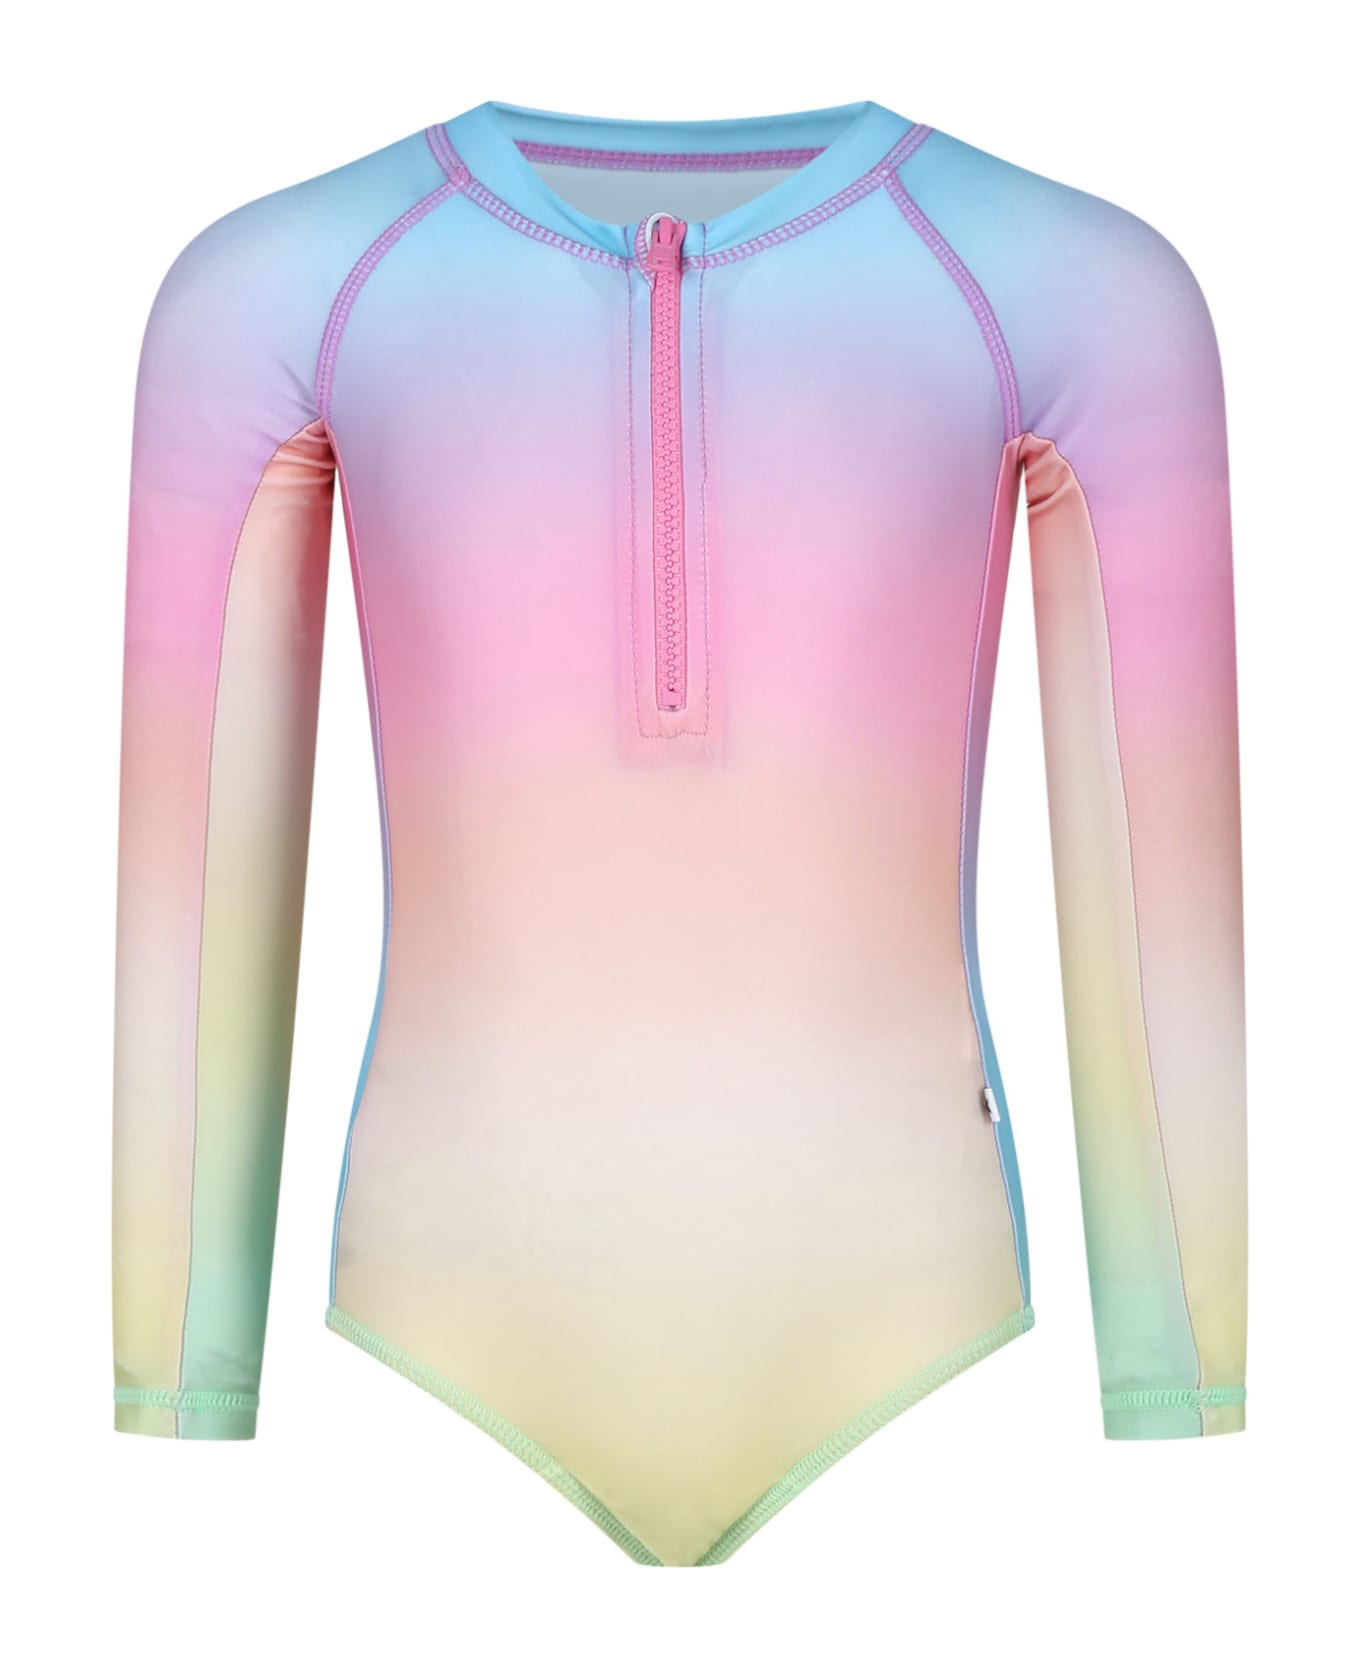 Molo Multicolor Swimsuit For Girl With Print - Multicolor